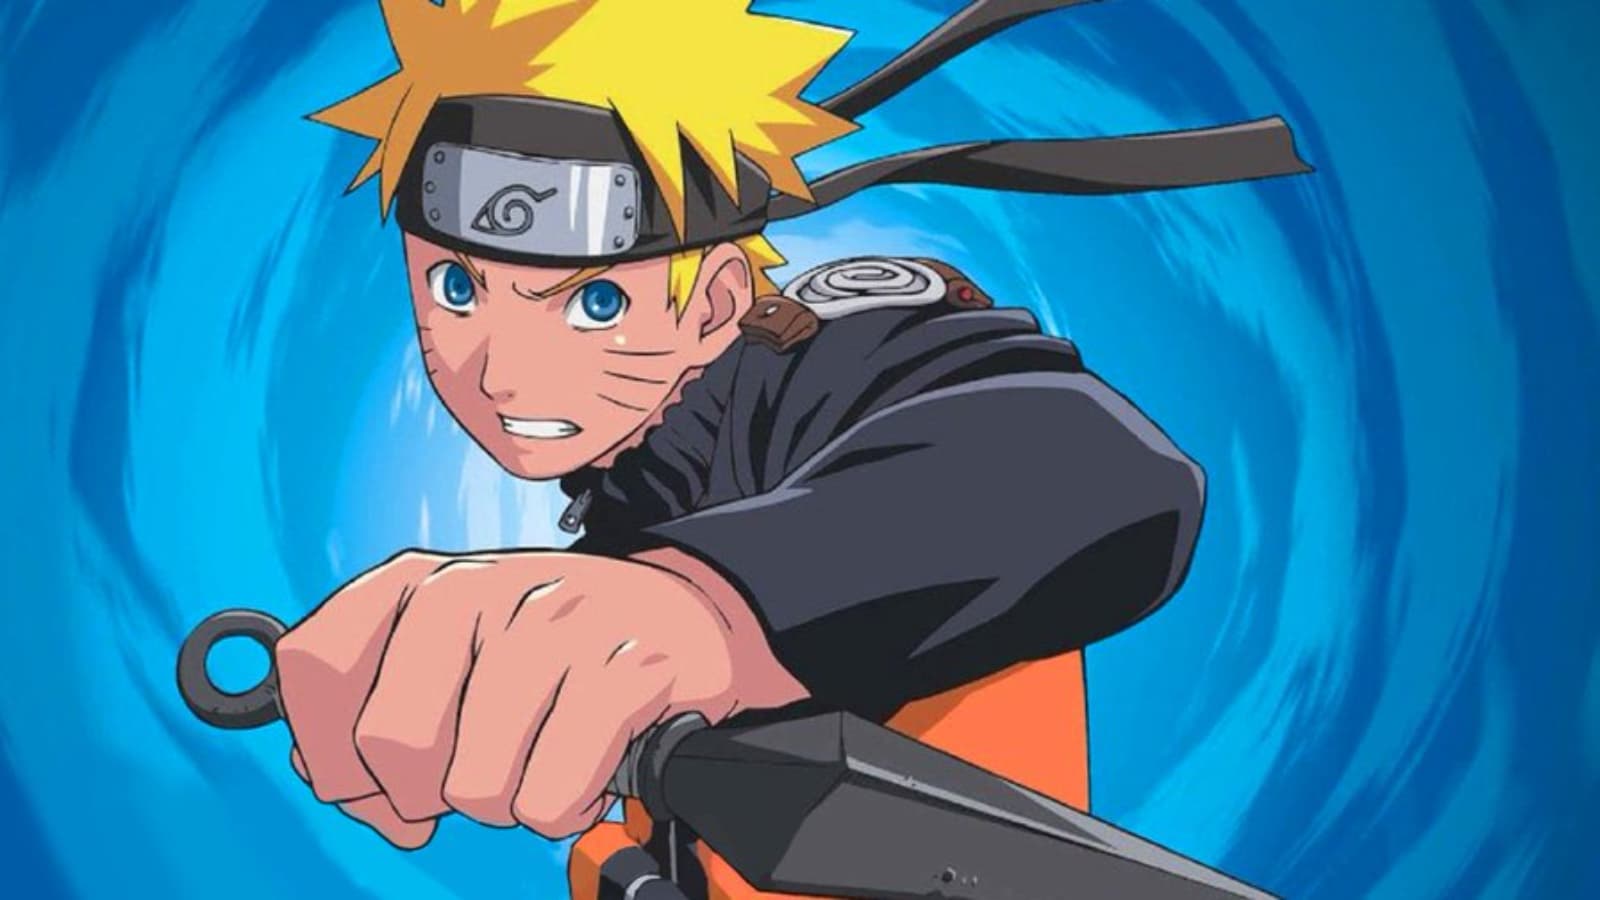 Fortnite Naruto skin release date leaked: New skin in season 8 FirstSportz